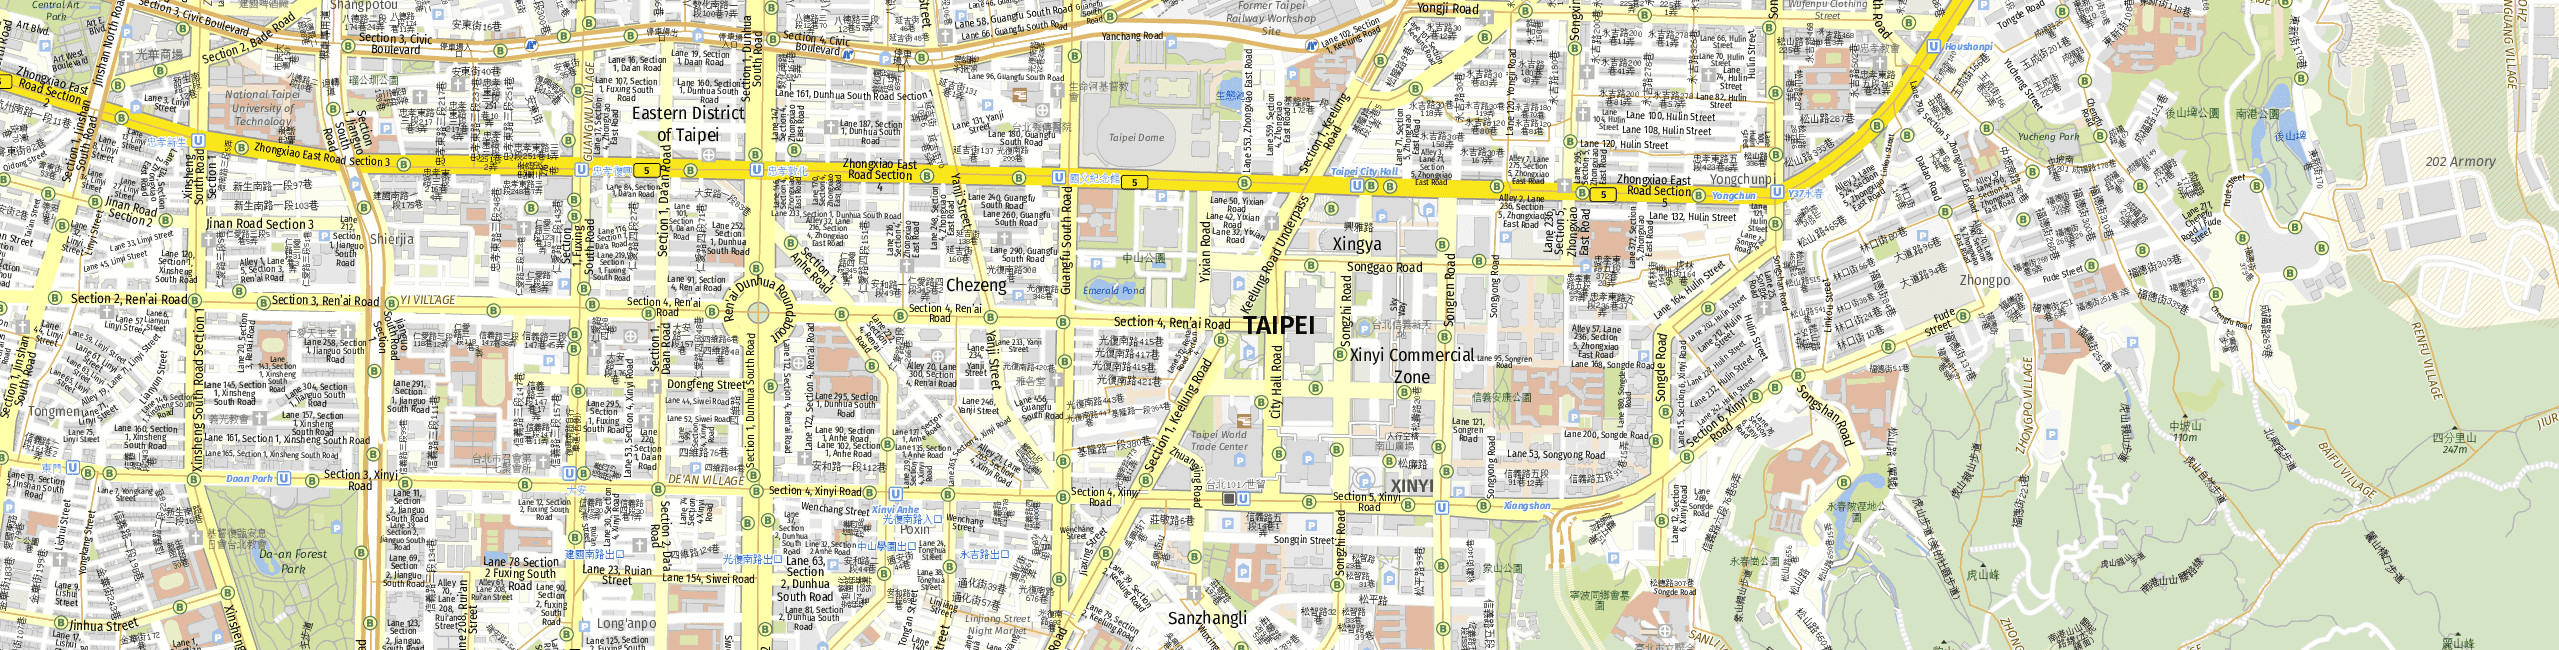 Stadtplan Taipei City zum Downloaden.